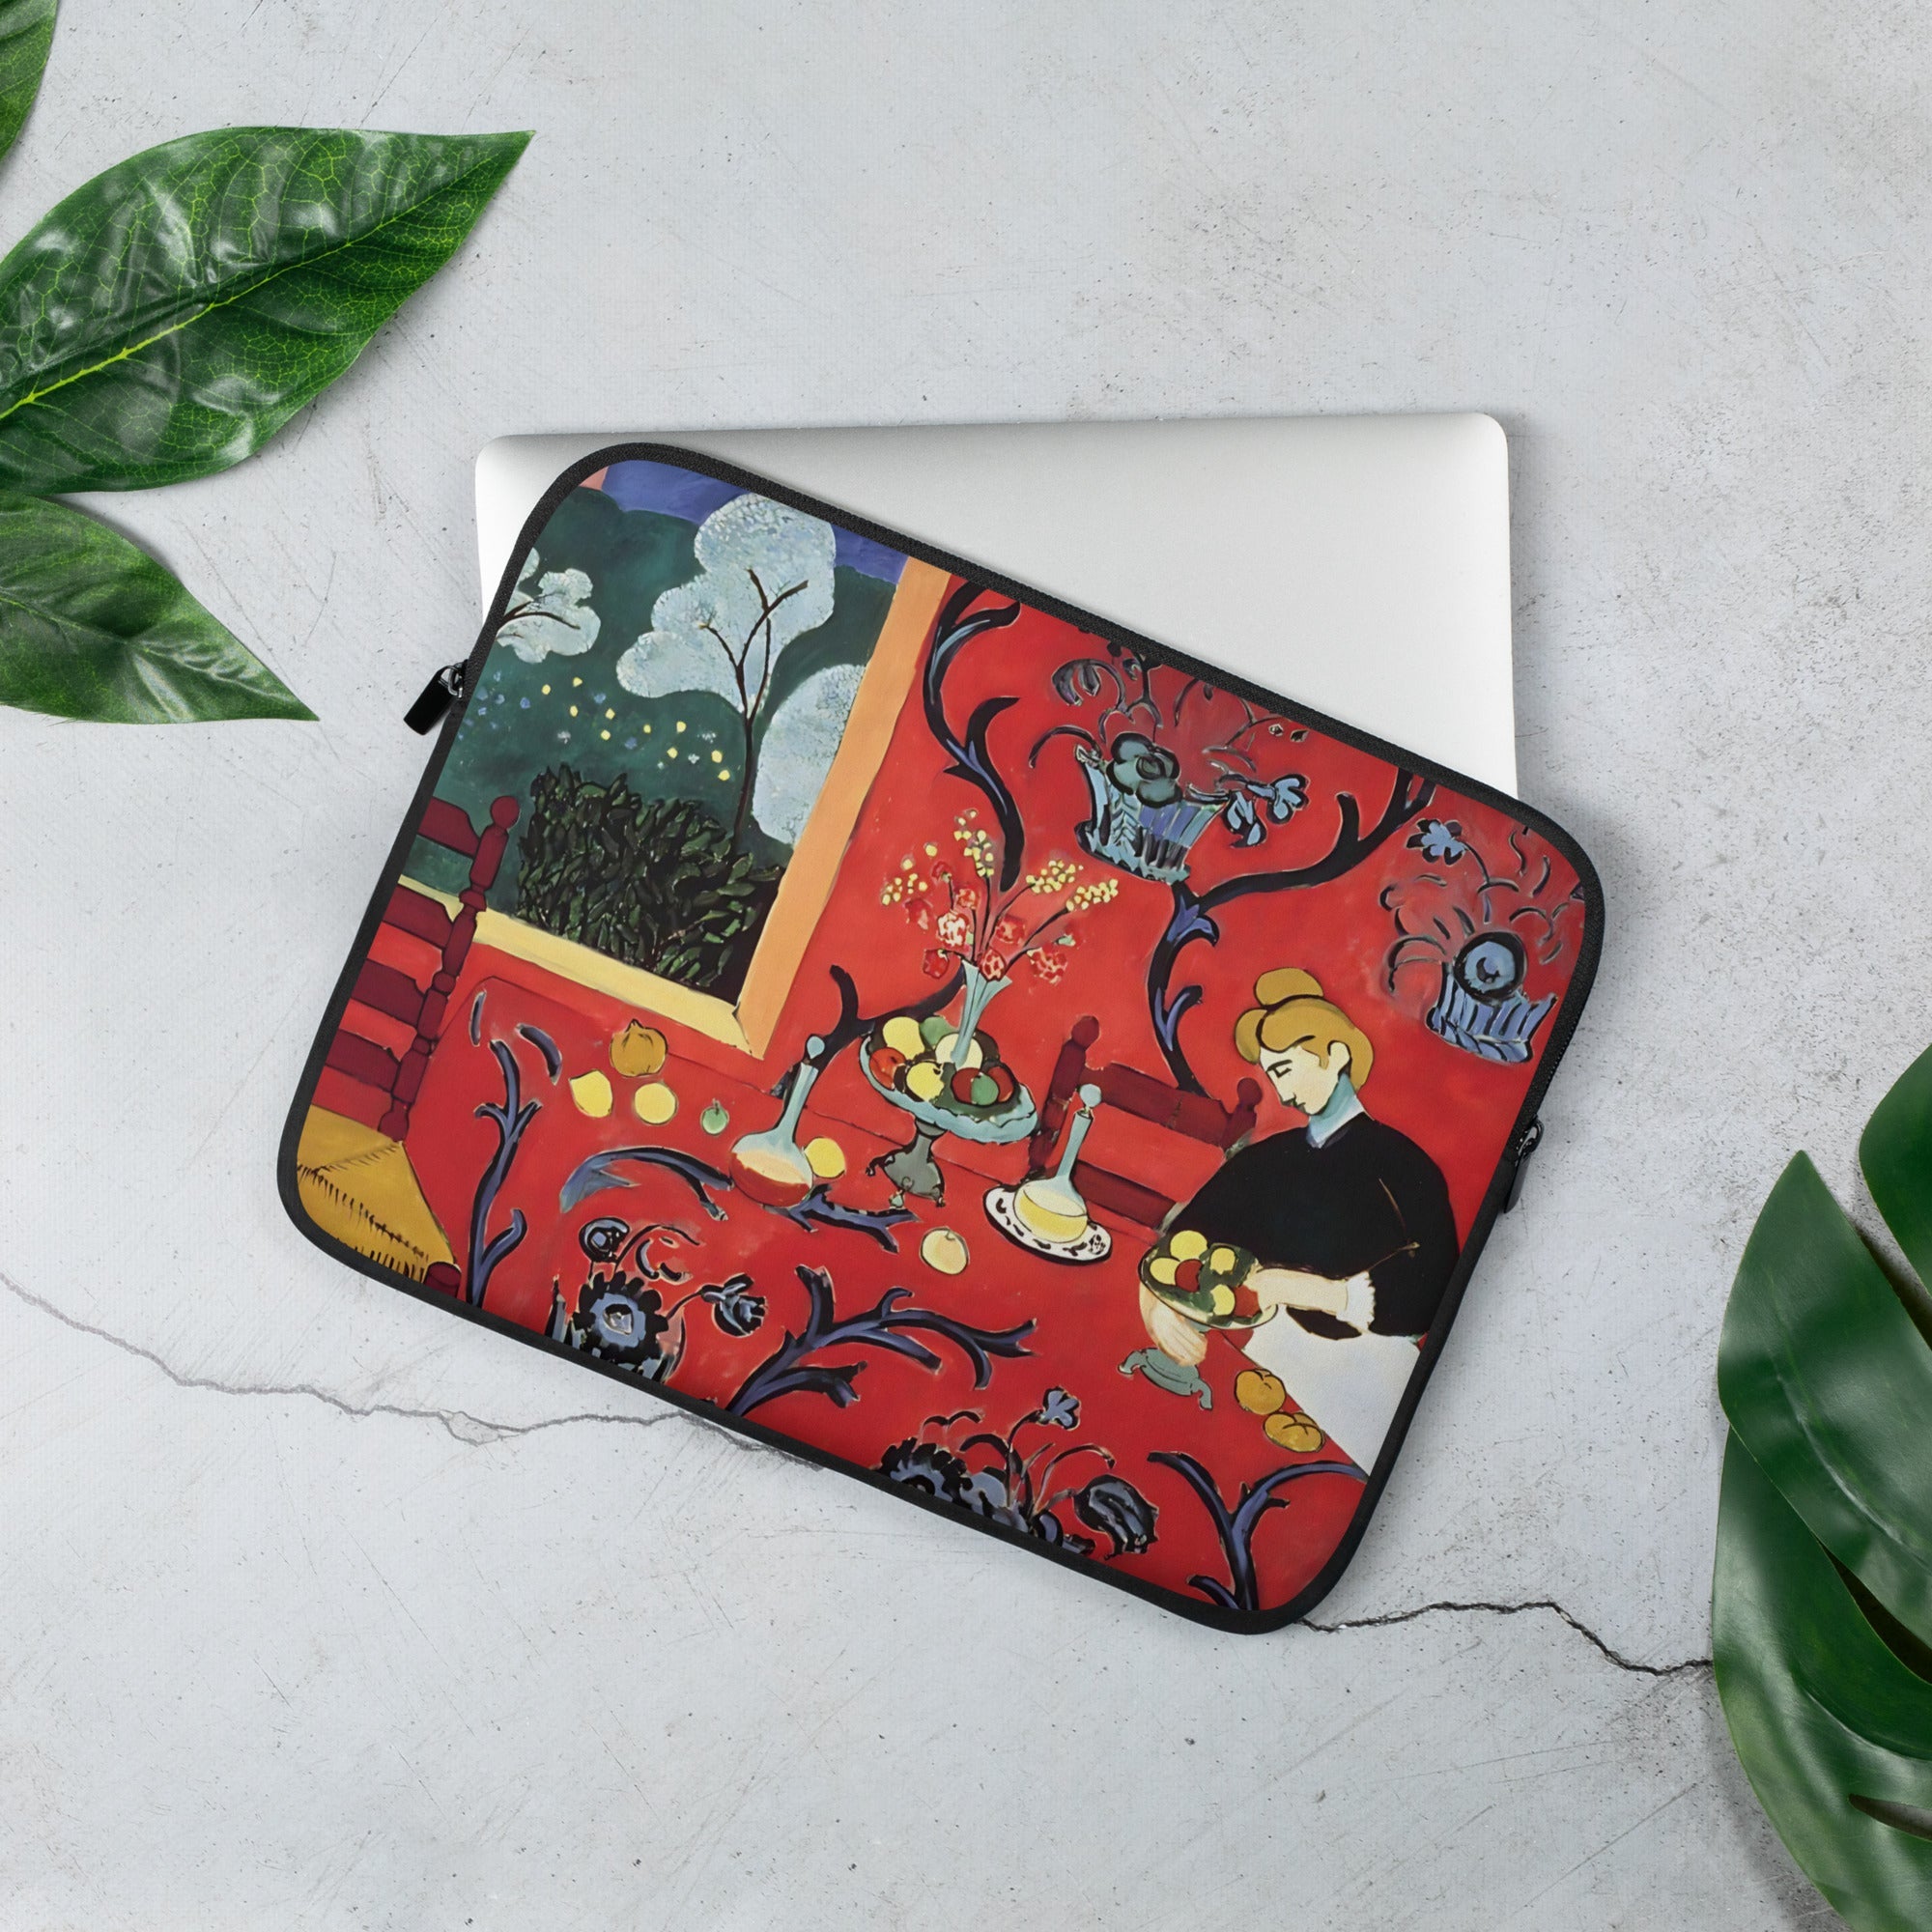 Henri Matisse ‘The Red Room’ Famous Painting Laptop Sleeve | Premium Art Laptop Sleeve